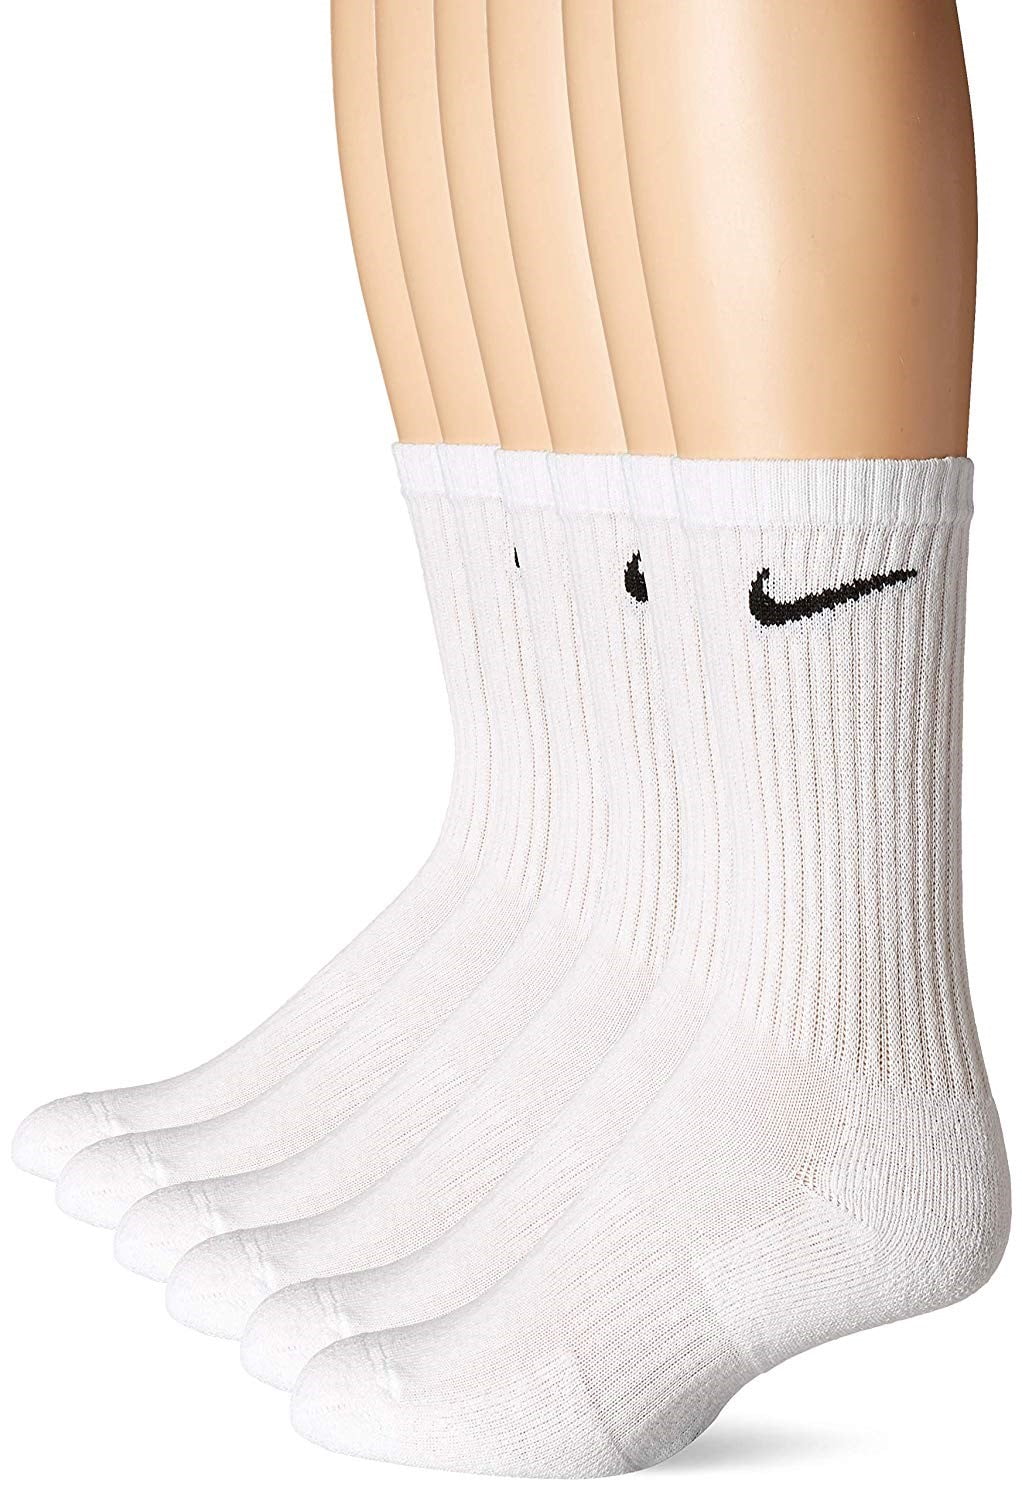 Everyday Crew Socks Unisex Nike Socks White/Black - Walmart.com